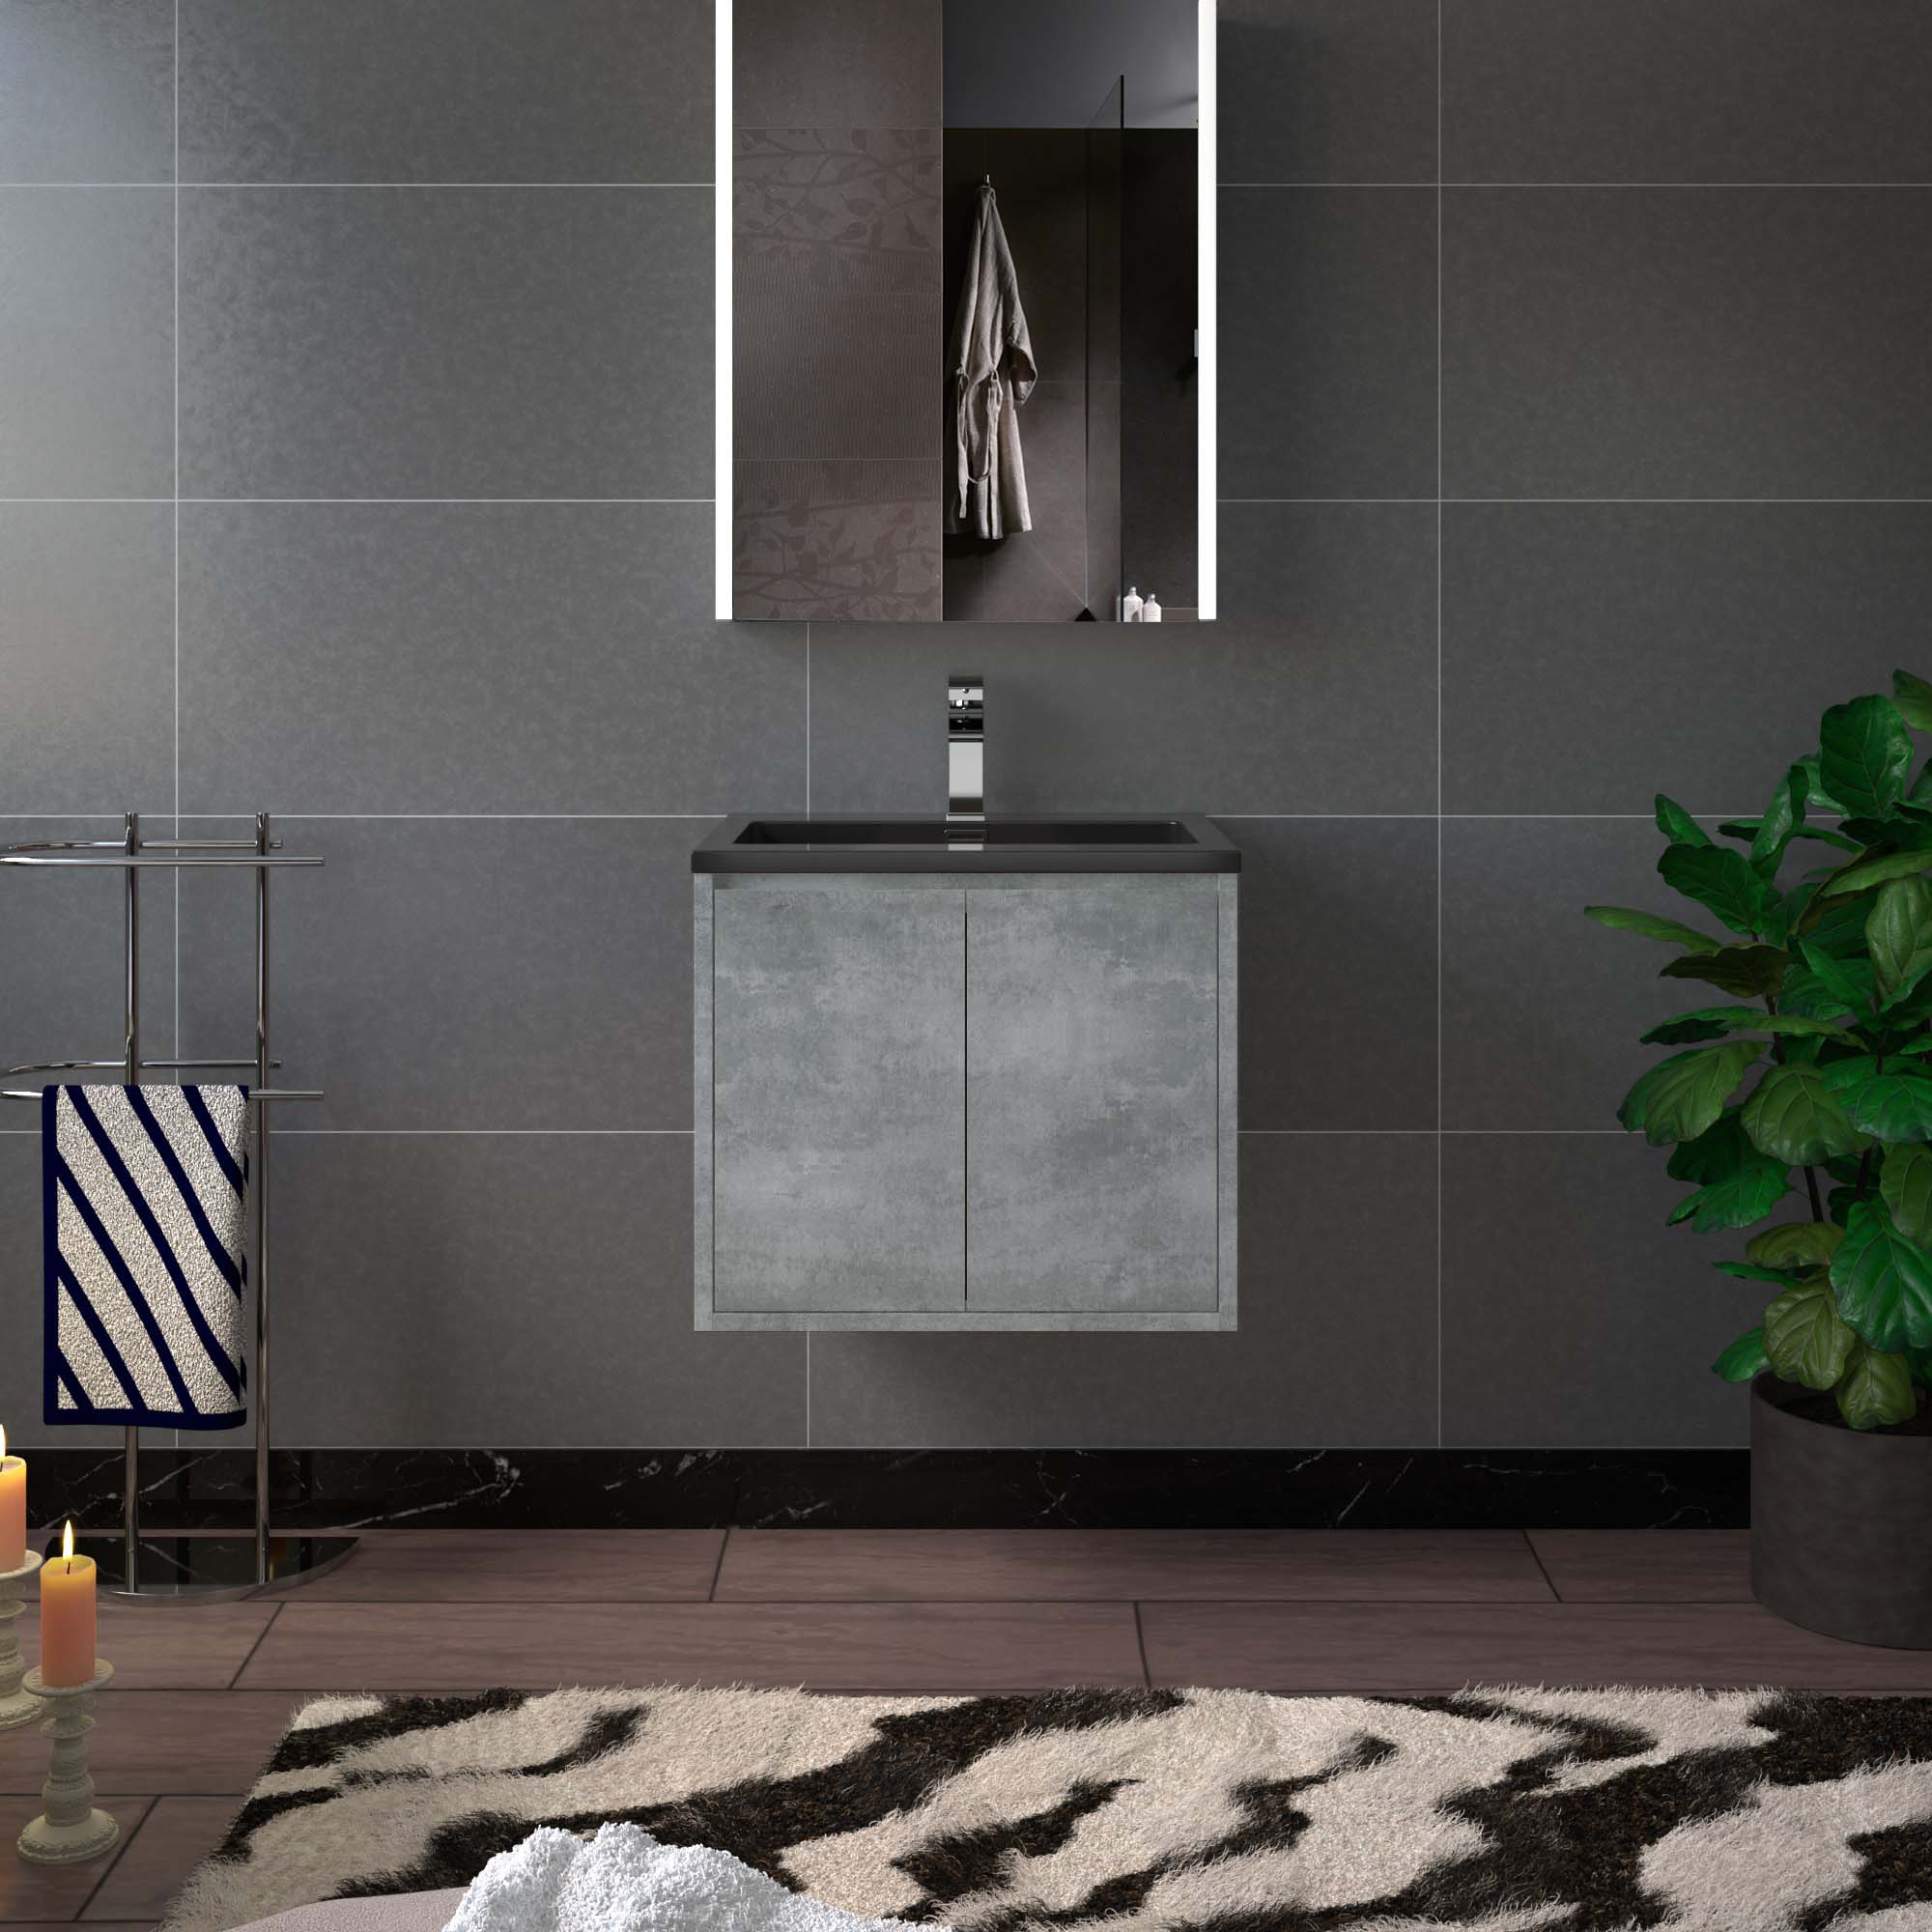 WOODBRIDGE 24 in. W x 19 in. D Bathroom Vanity in Gray with Quartz Sand Composite Vanity Top in Matte Black, with Stainless Steel Frame